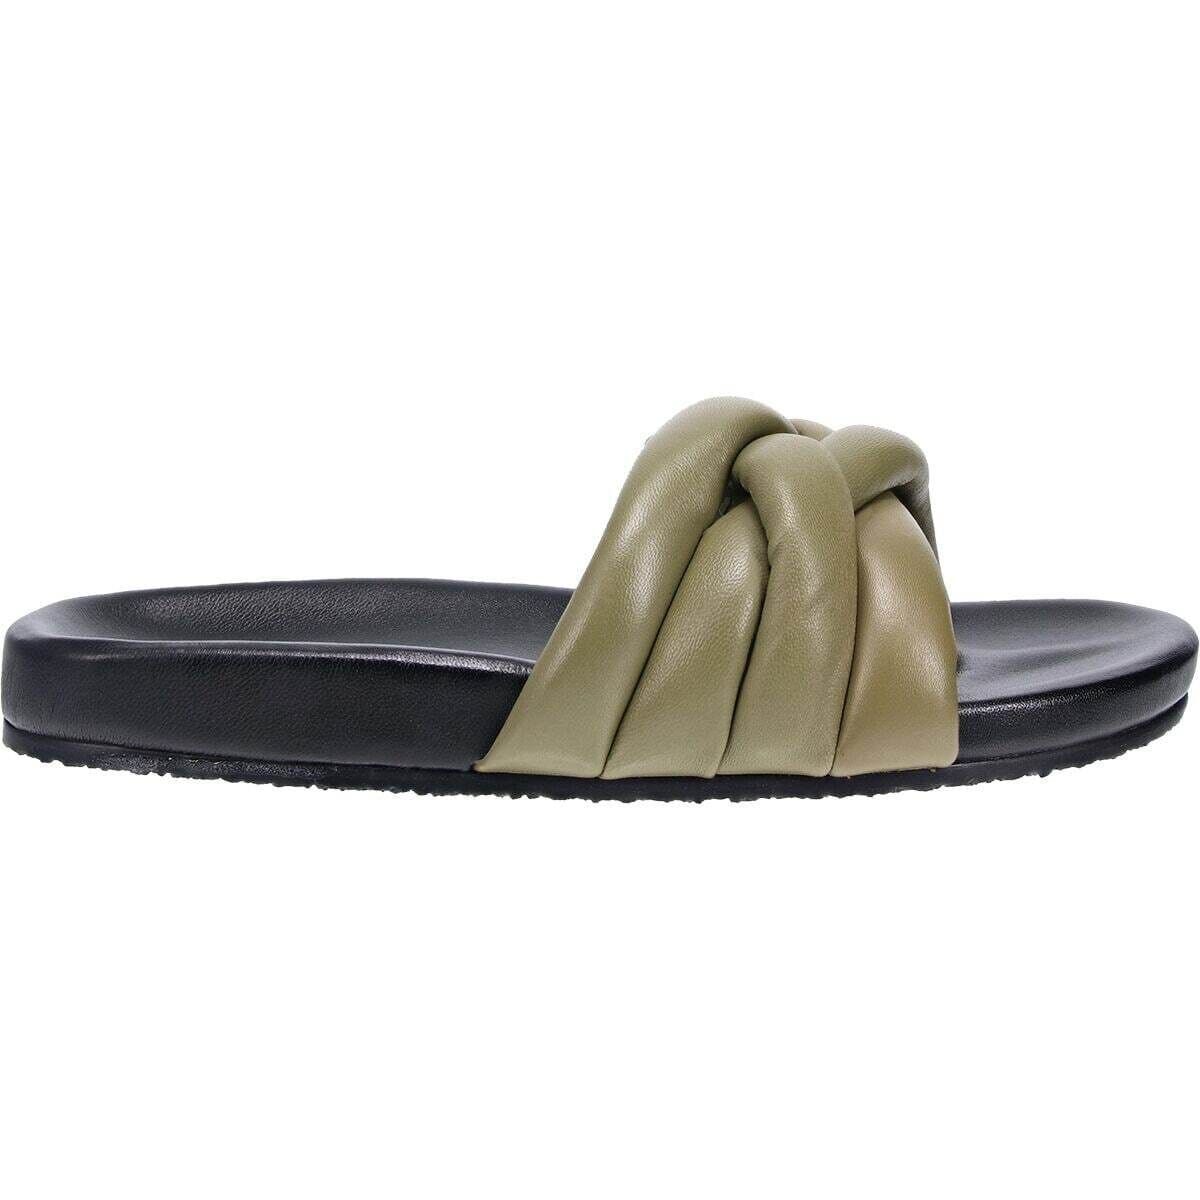 Seychelles Footwear Low Key Glow Up Sandal - Women's Olive/Black Leather, 11.0 product image